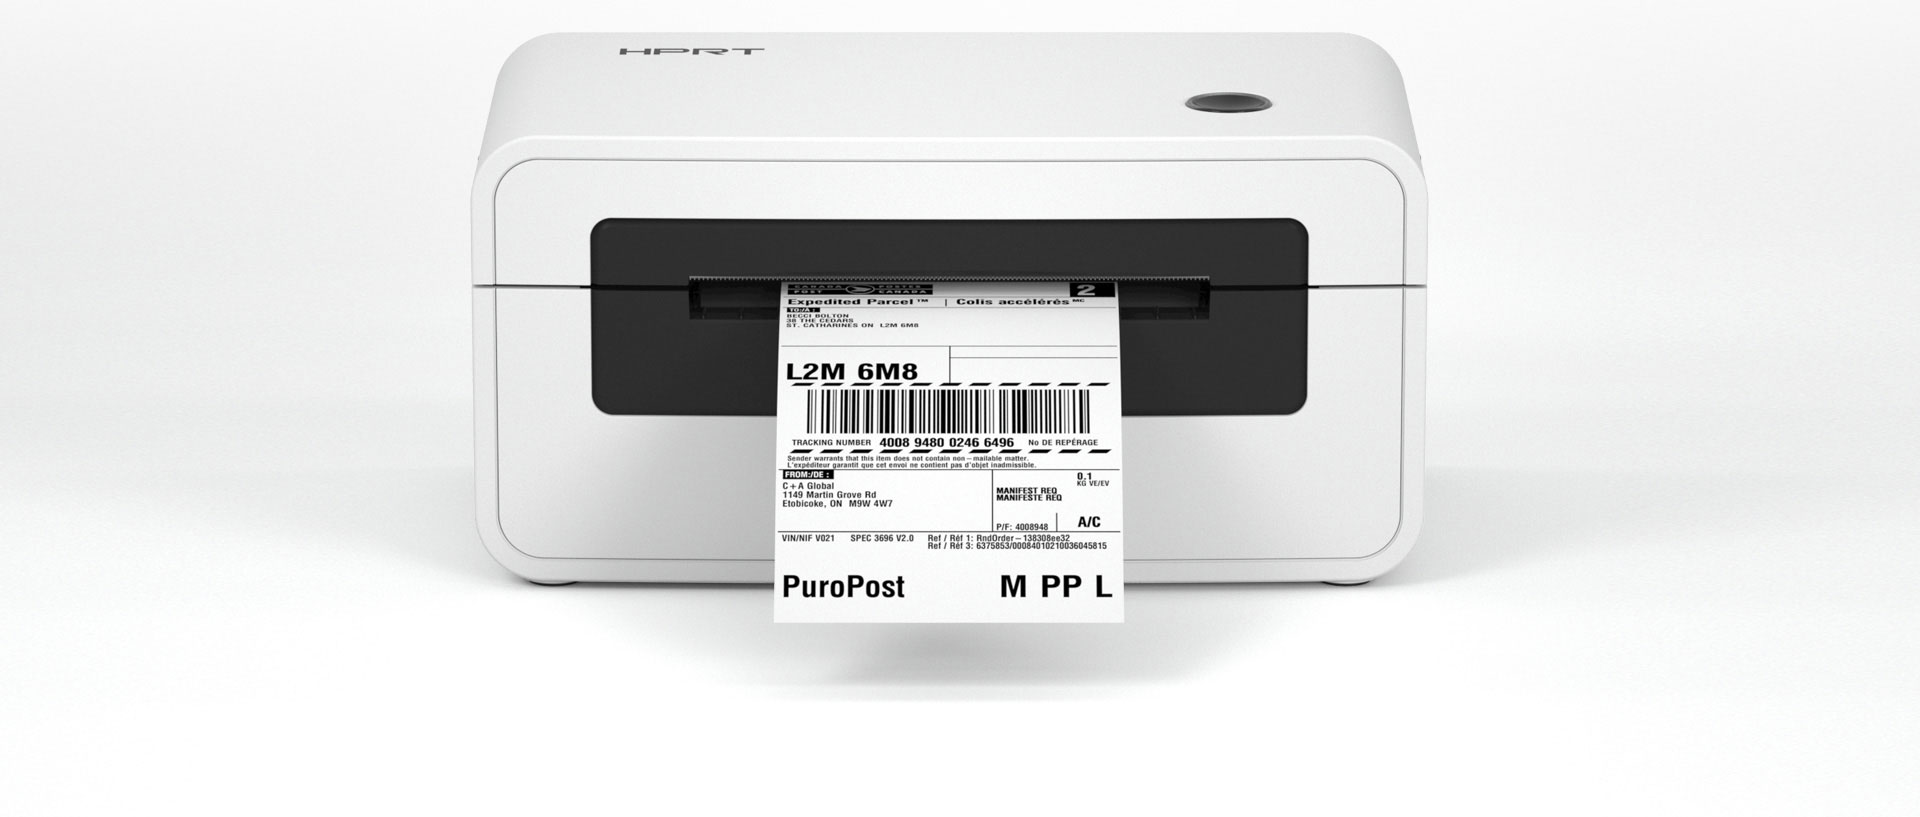 Ebay shipping label printer